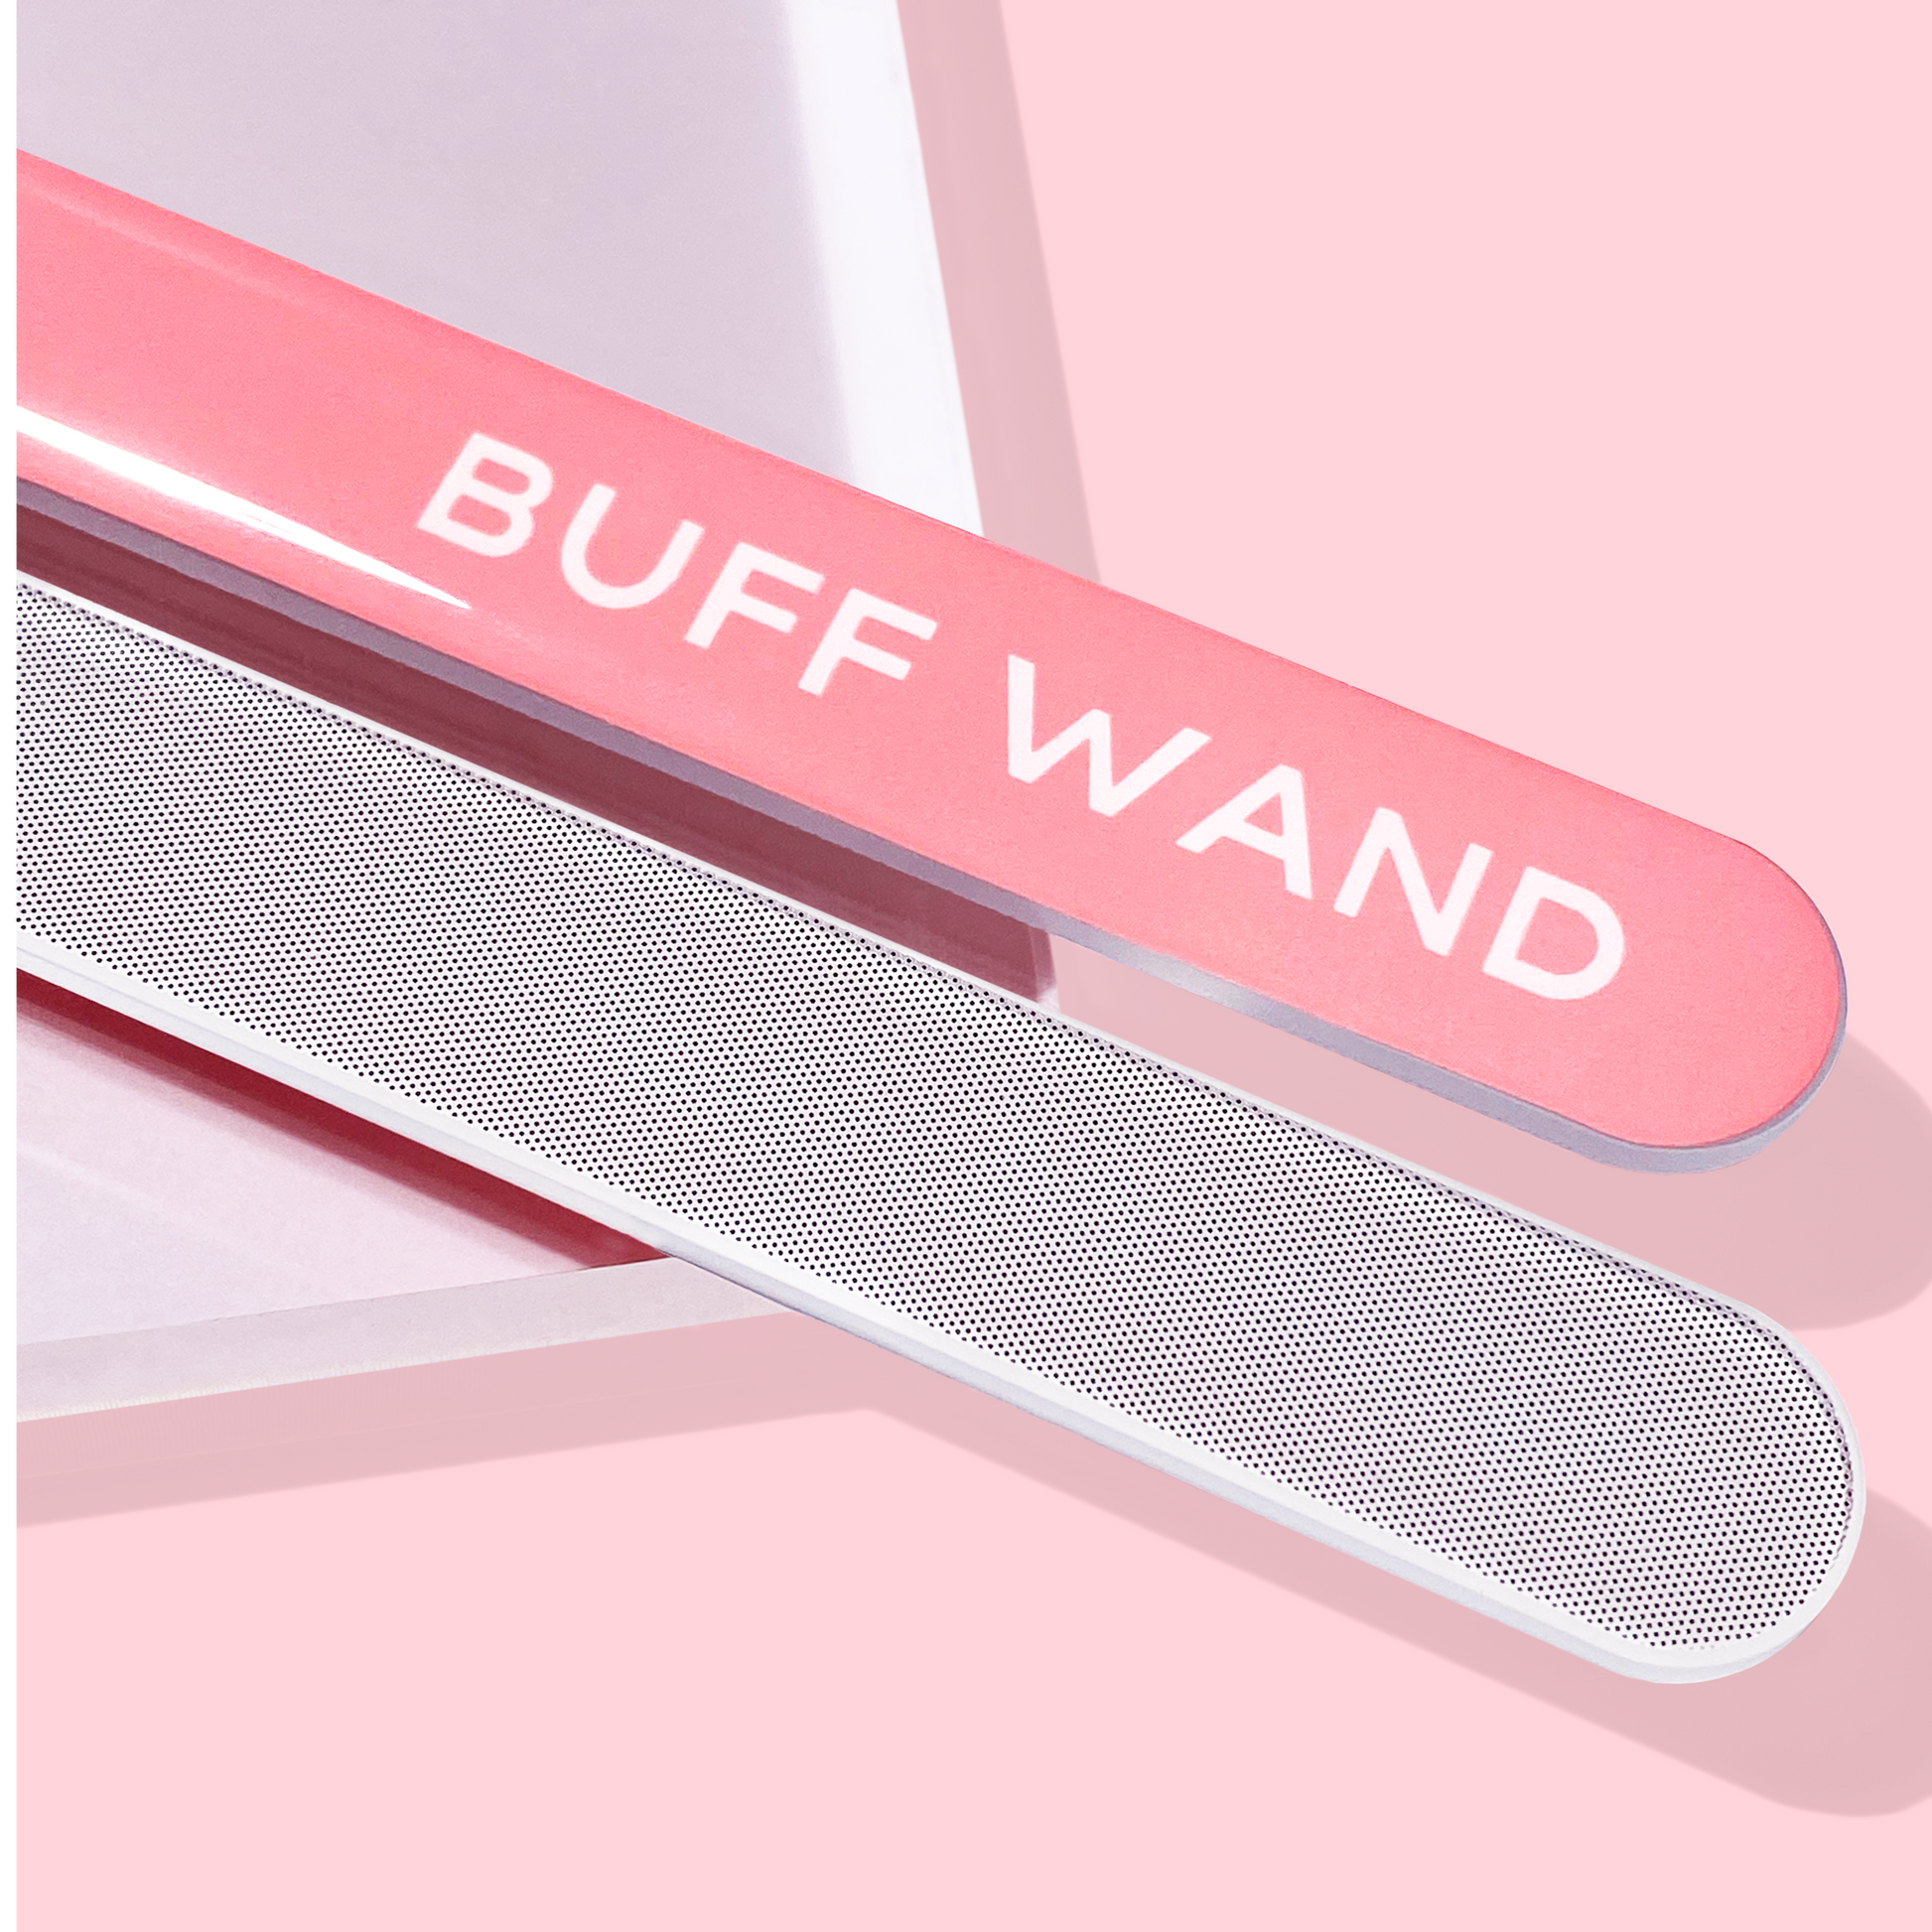 Buff Wand reusable glass nail file and shiner showing nano-technology buffing surface